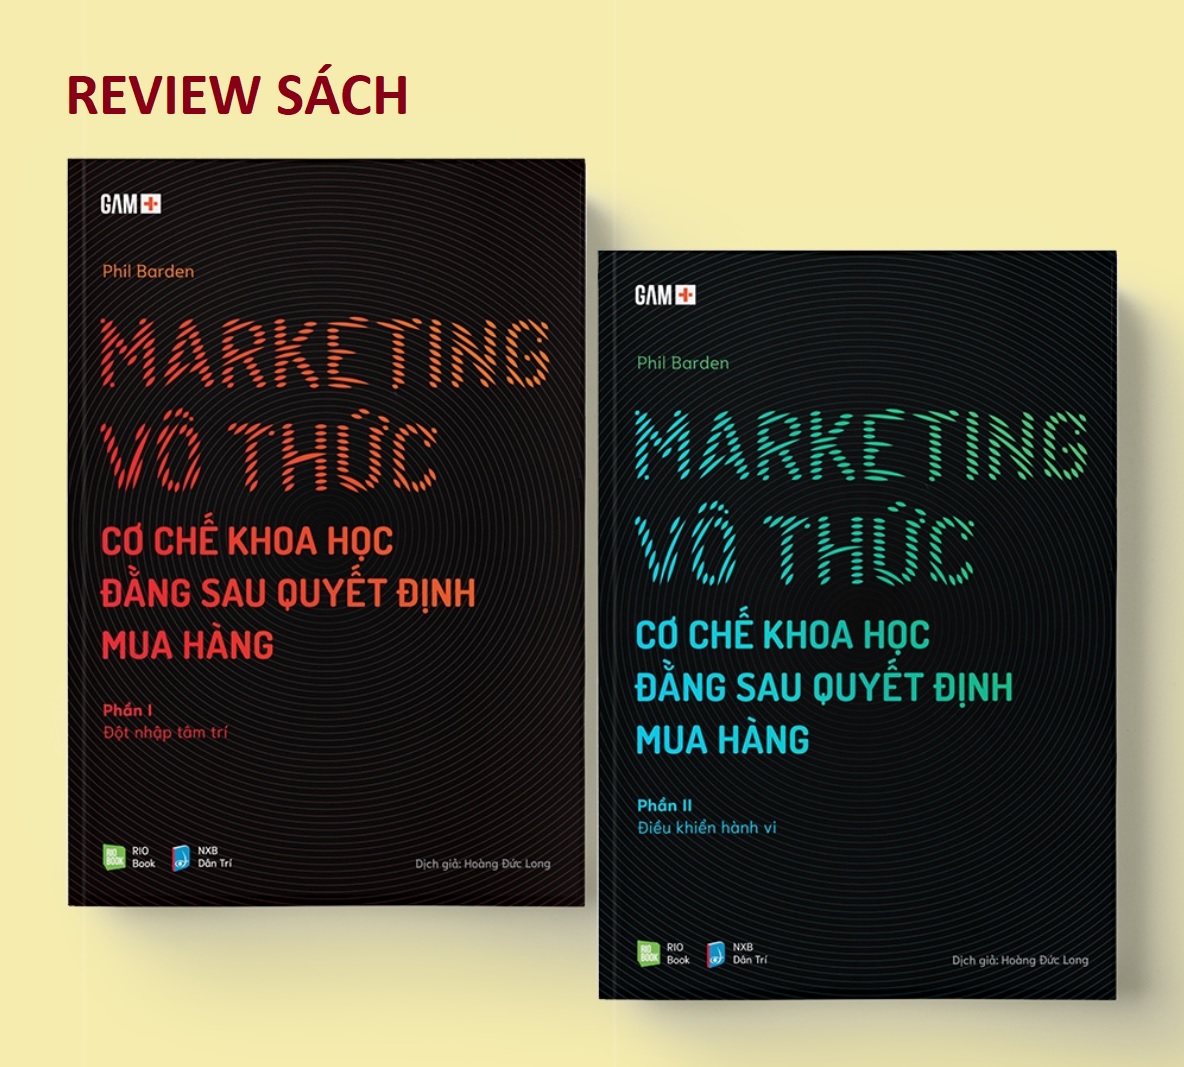 Review Sach Marketing Vo Thuc Co che khoa hoc dang sau quyet dinh mua hang - Technology Home 4